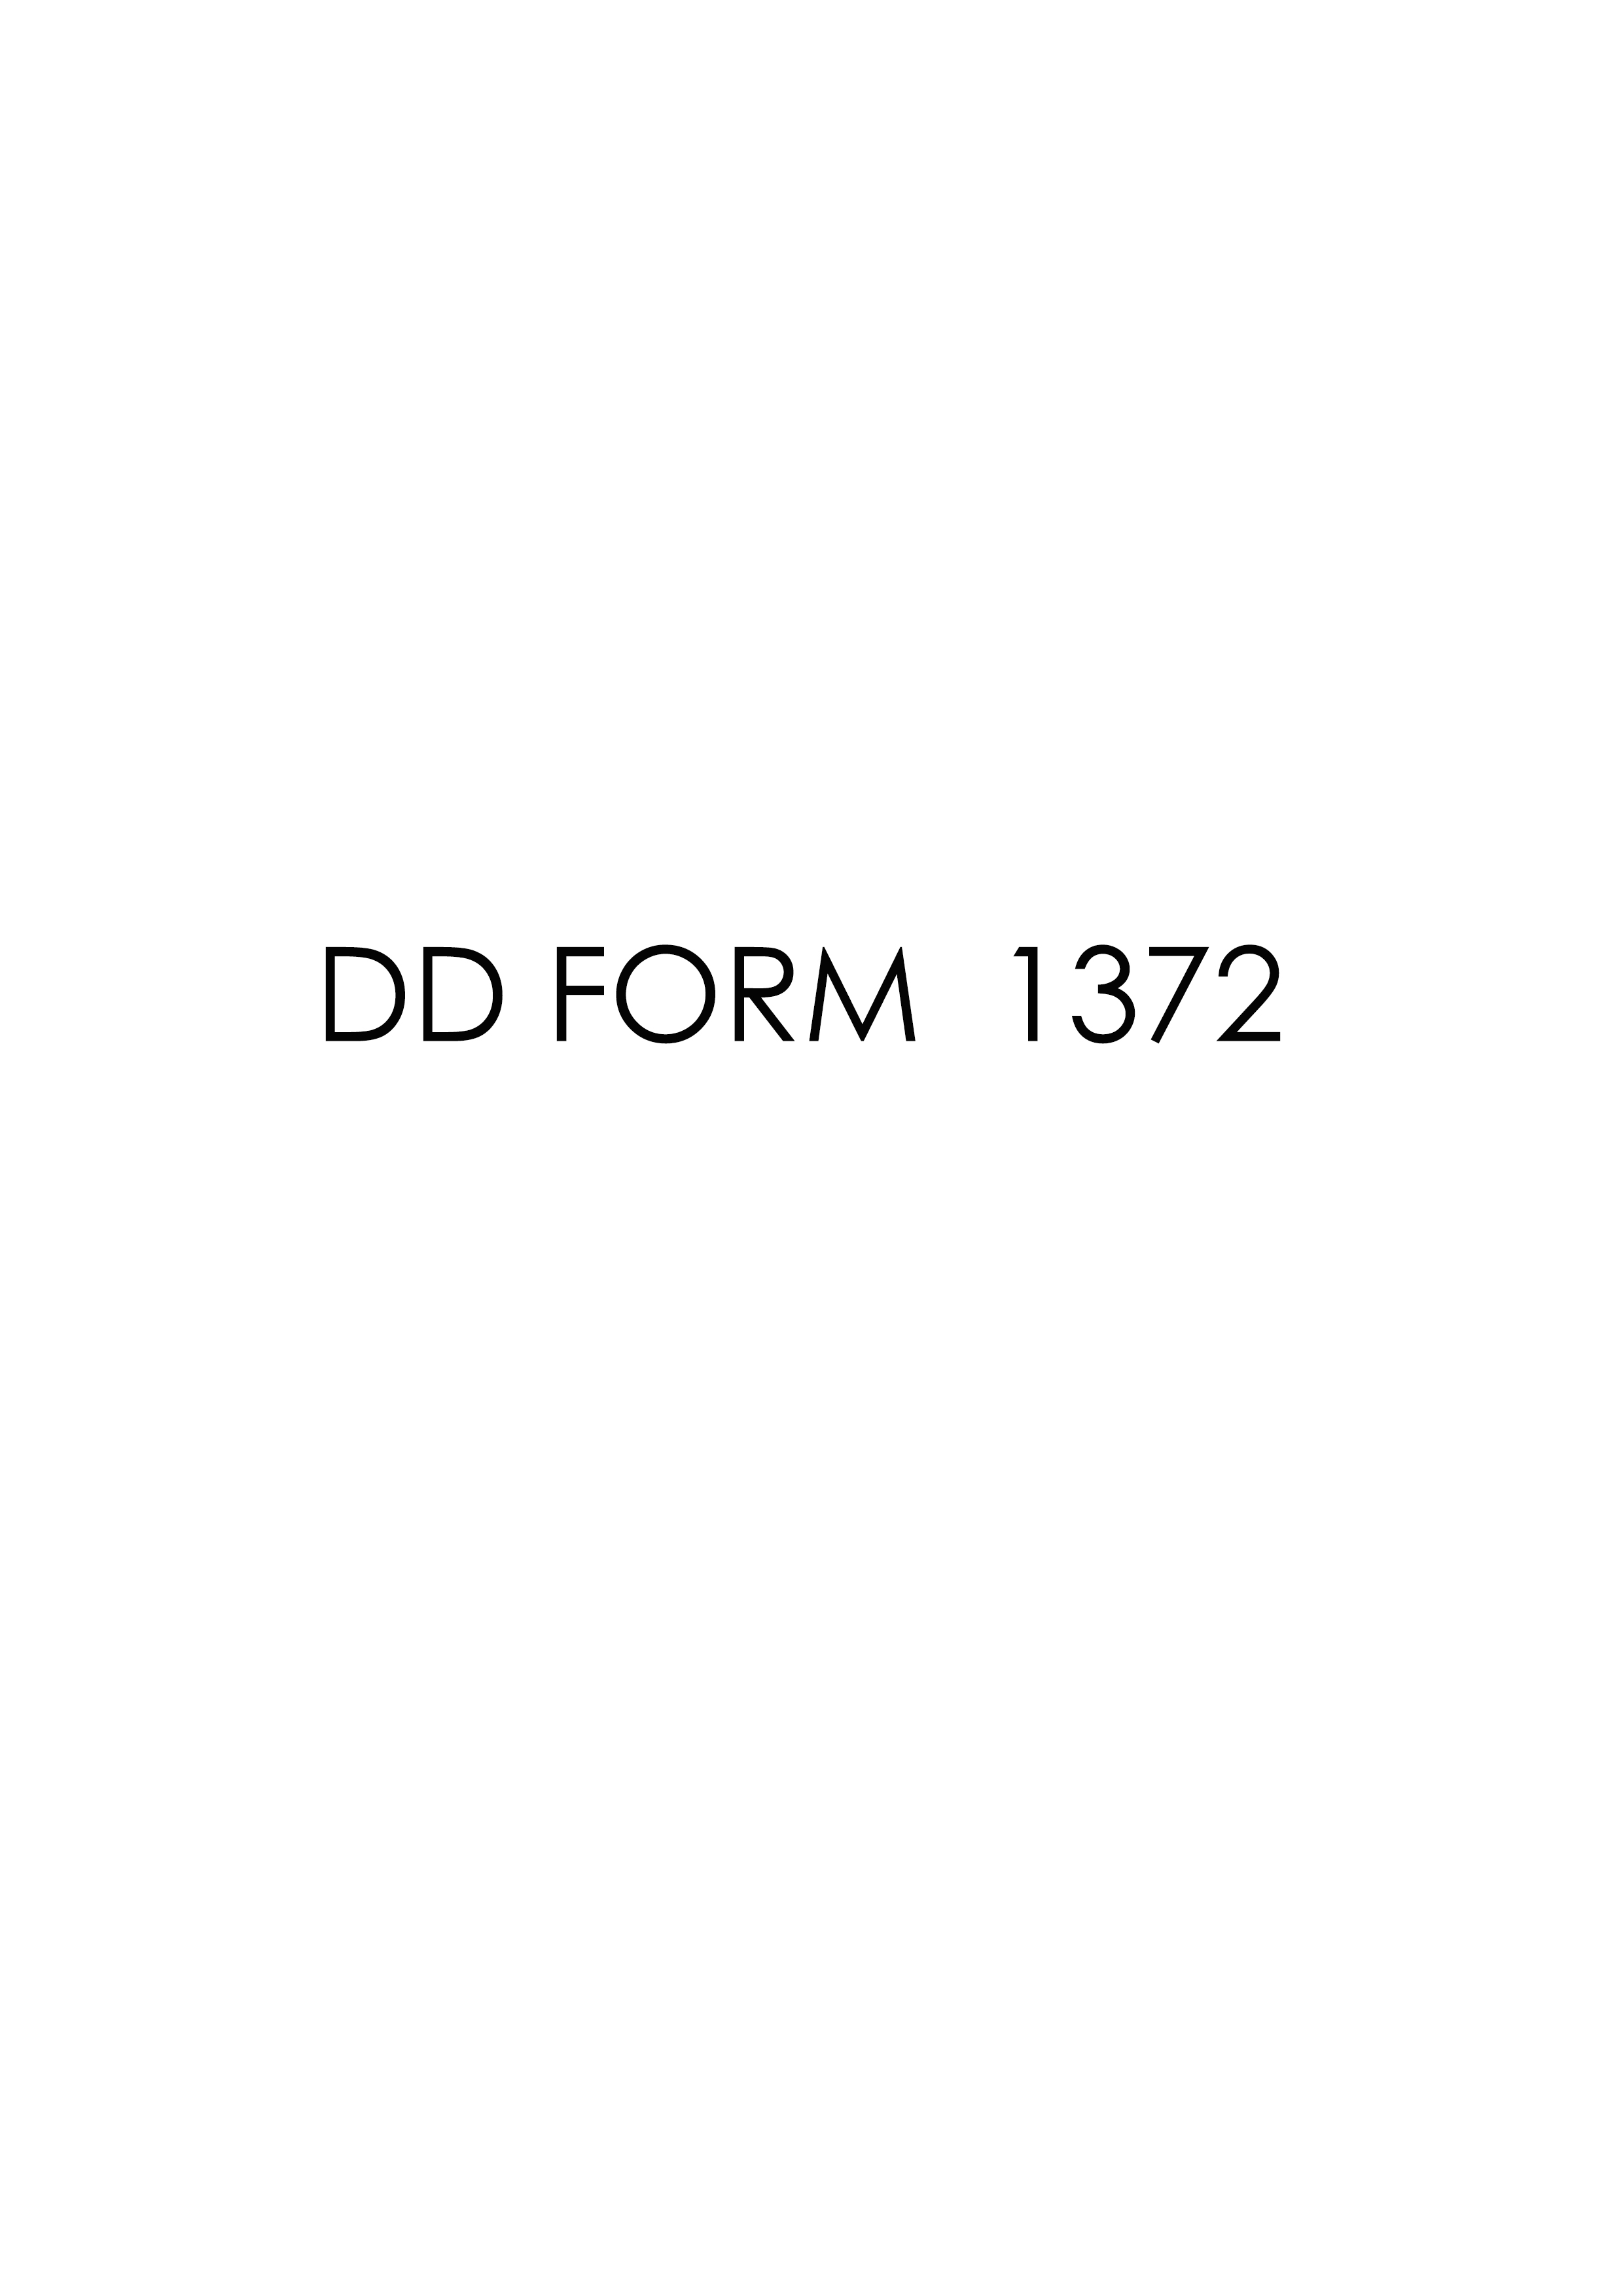 Download dd form 1372